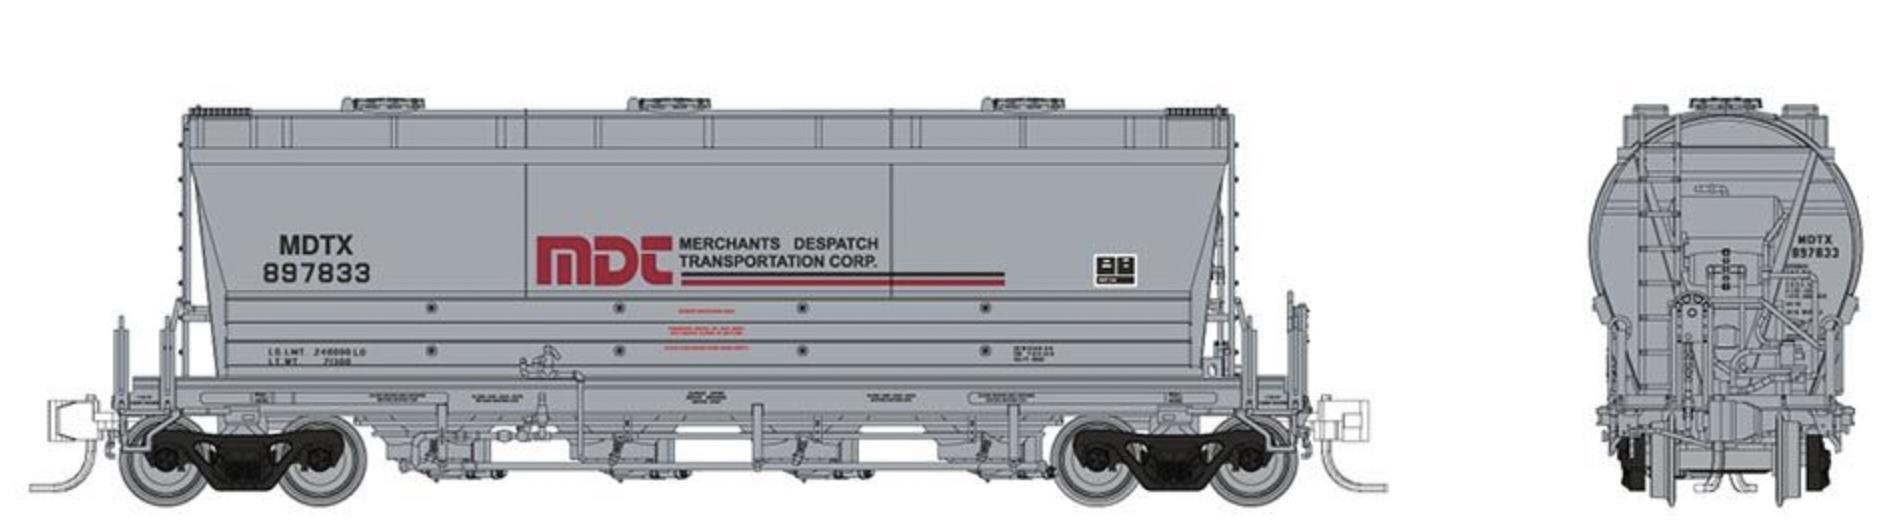 N Scale - Rapido Trains - 533010A - Covered Hopper, 4-Bay, ACF Flexi Flo - Merchants Despatch - 897833